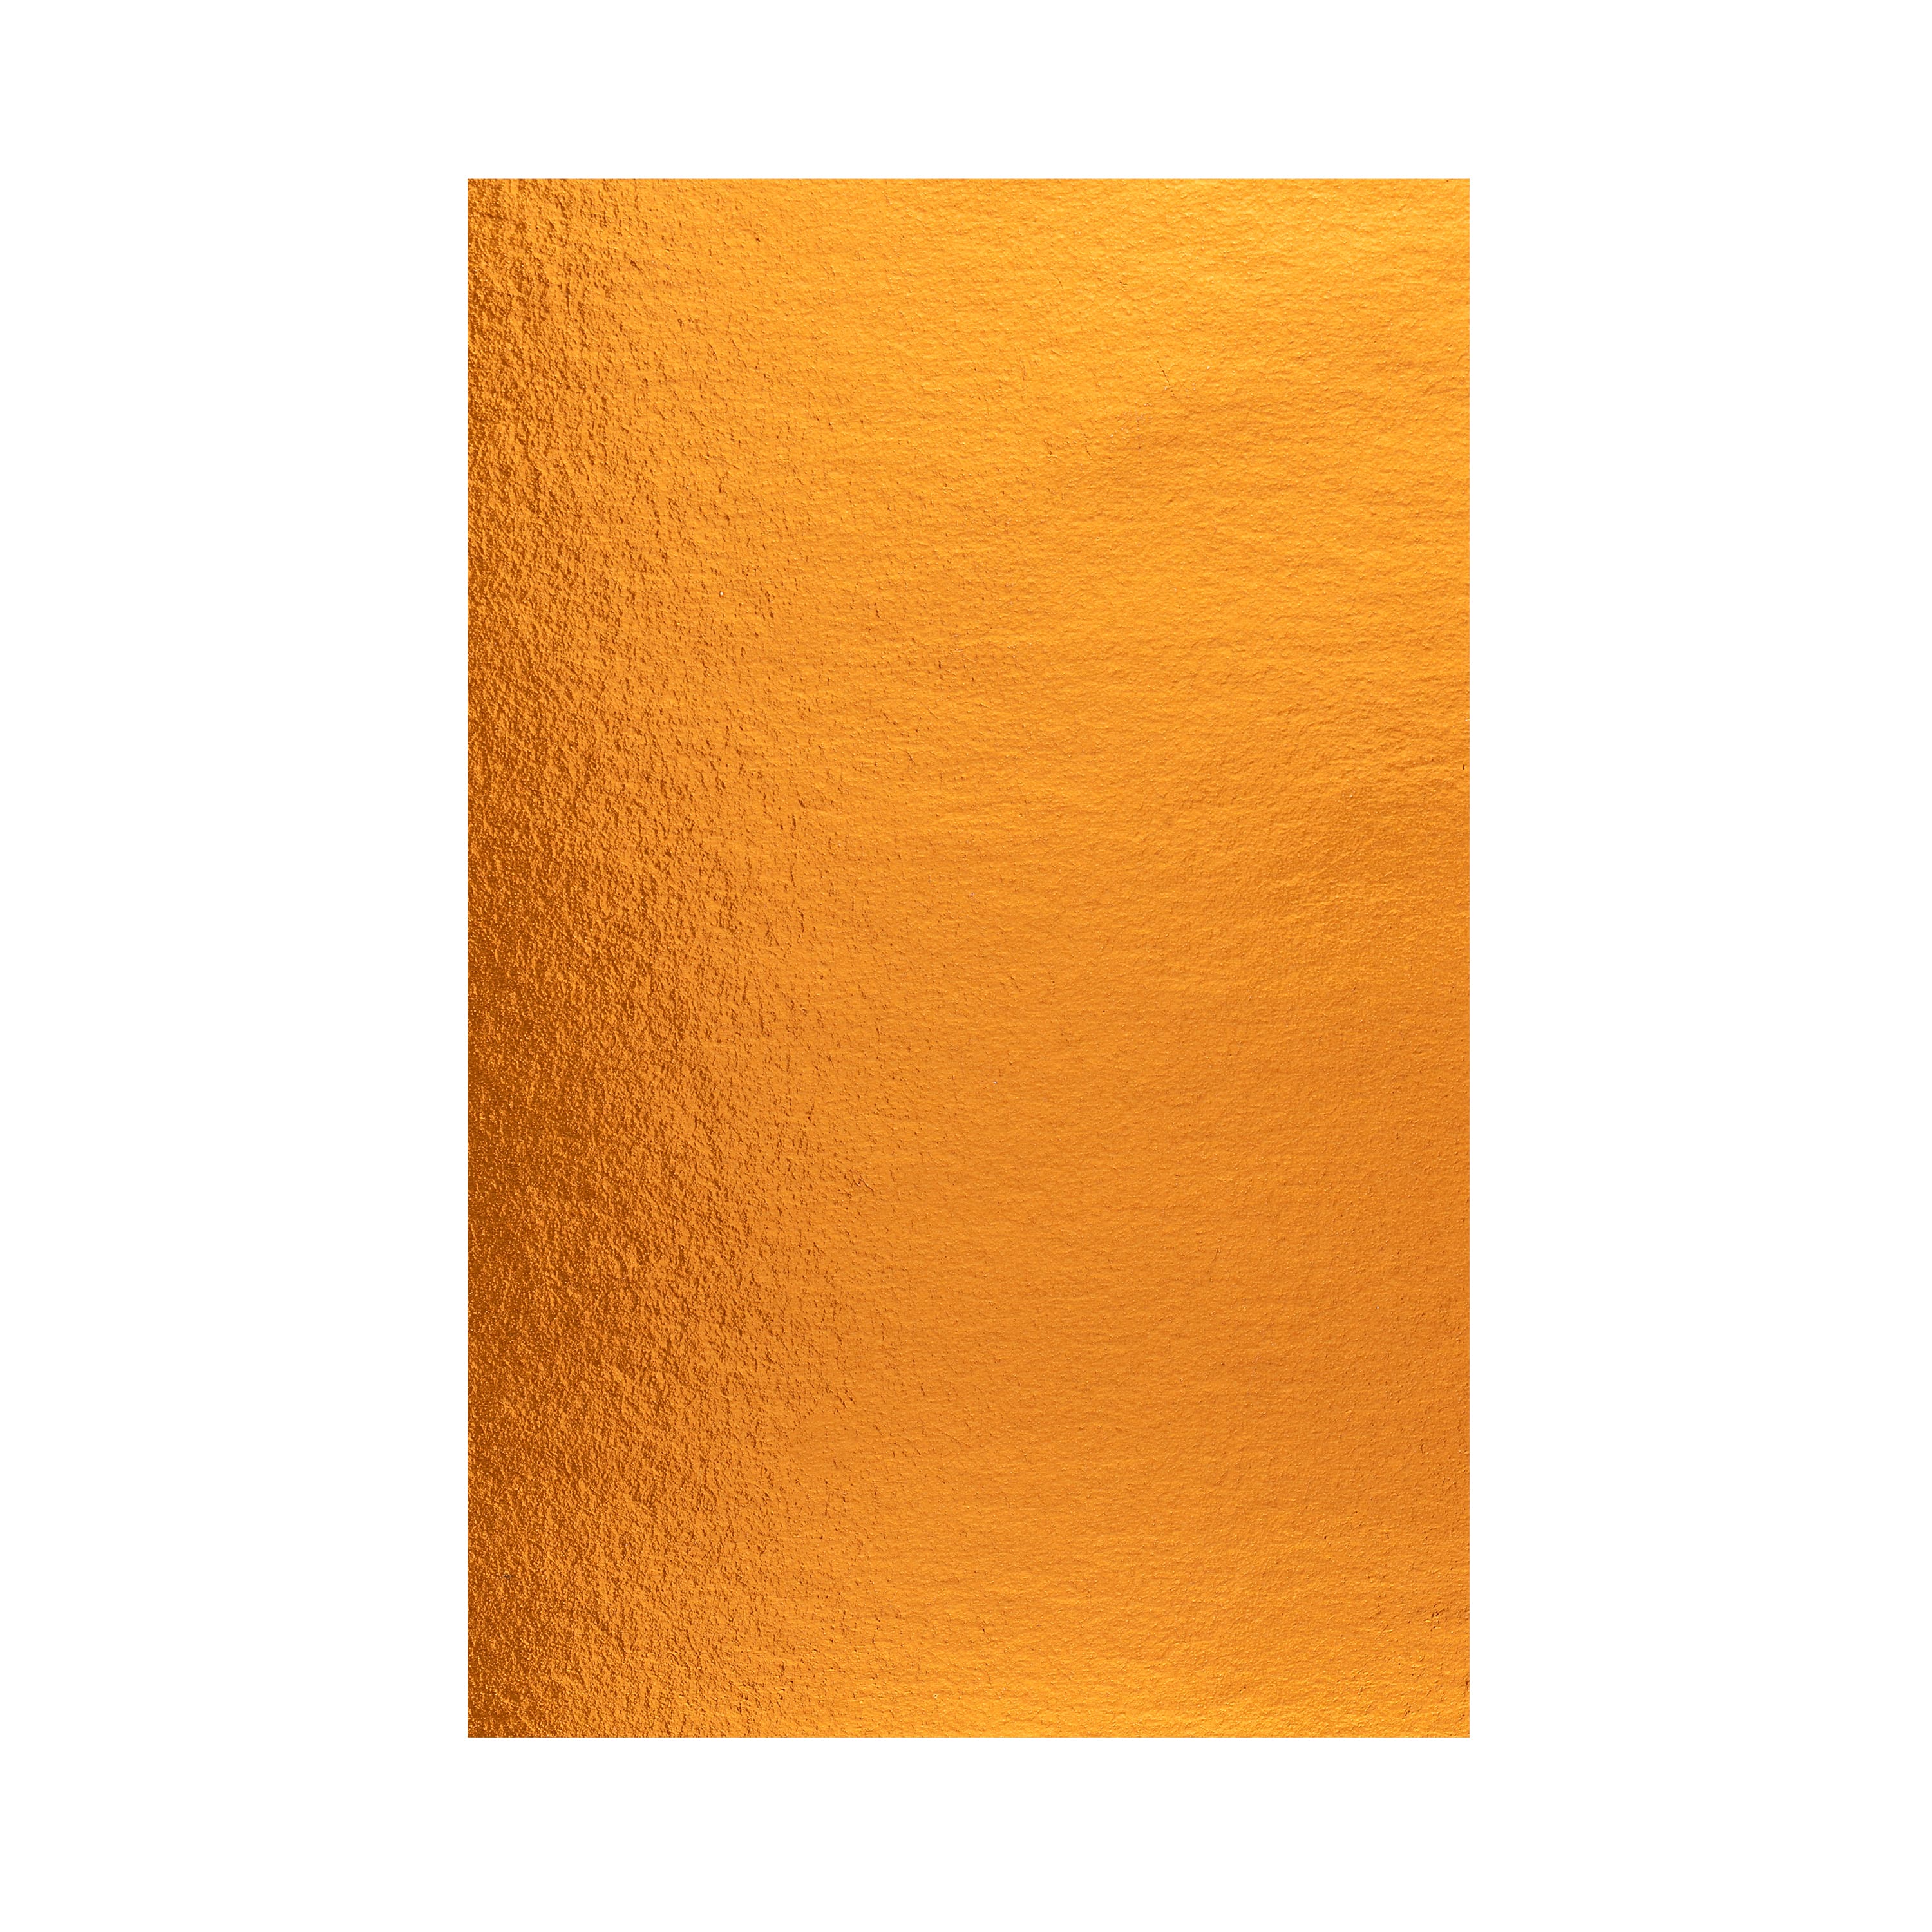 5 x 7 Curious Metallics Ice Gold - Bulk and Wholesale - Fine Cardstock